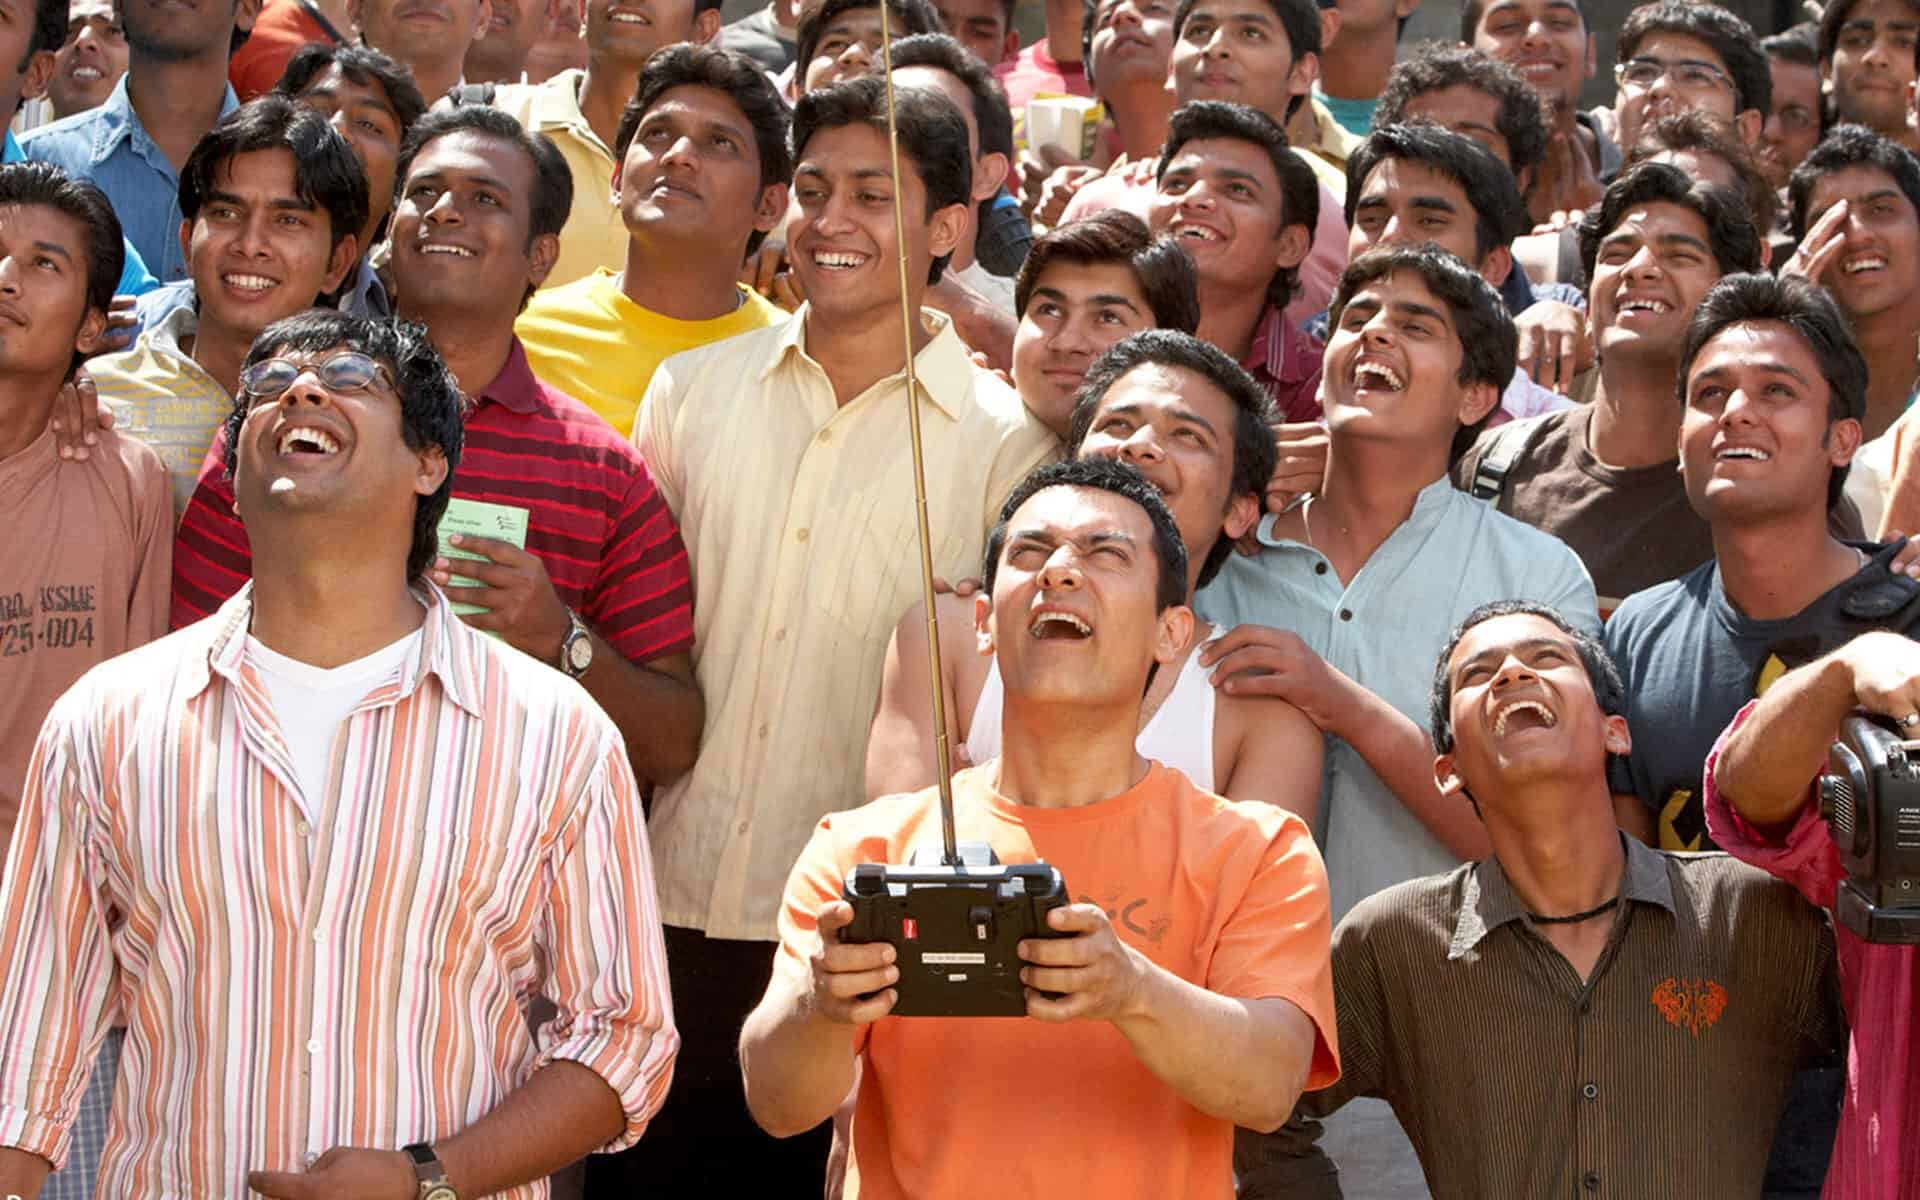 3 idiots: A 2009 Indian Hindi-language coming-of-age comedy-drama film. 1920x1200 HD Wallpaper.